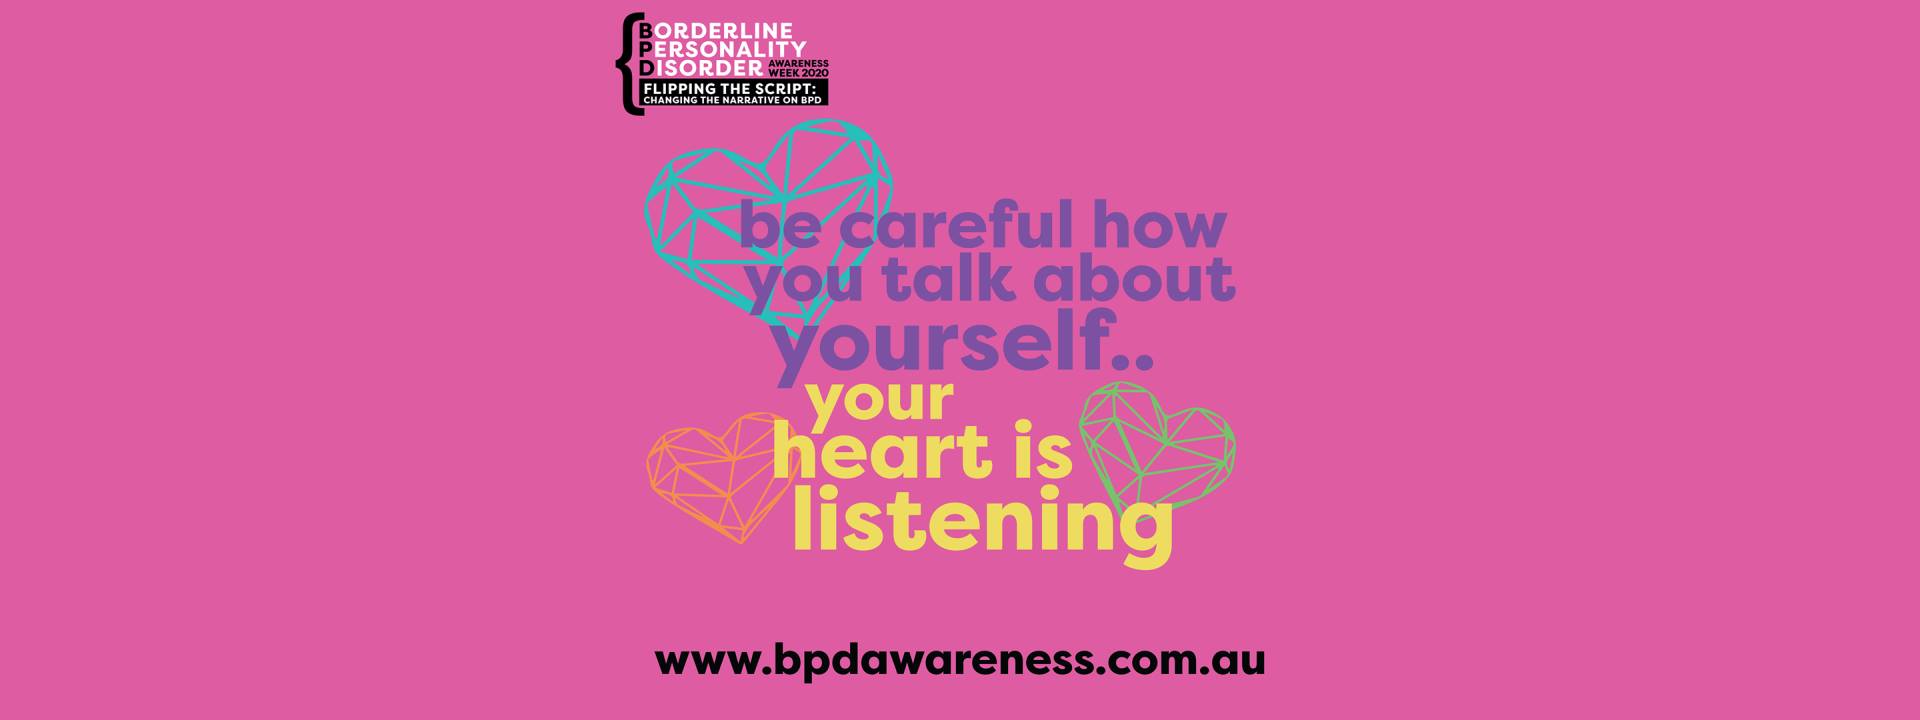 BPD Awareness Week 2020 - Your Heart is Listening